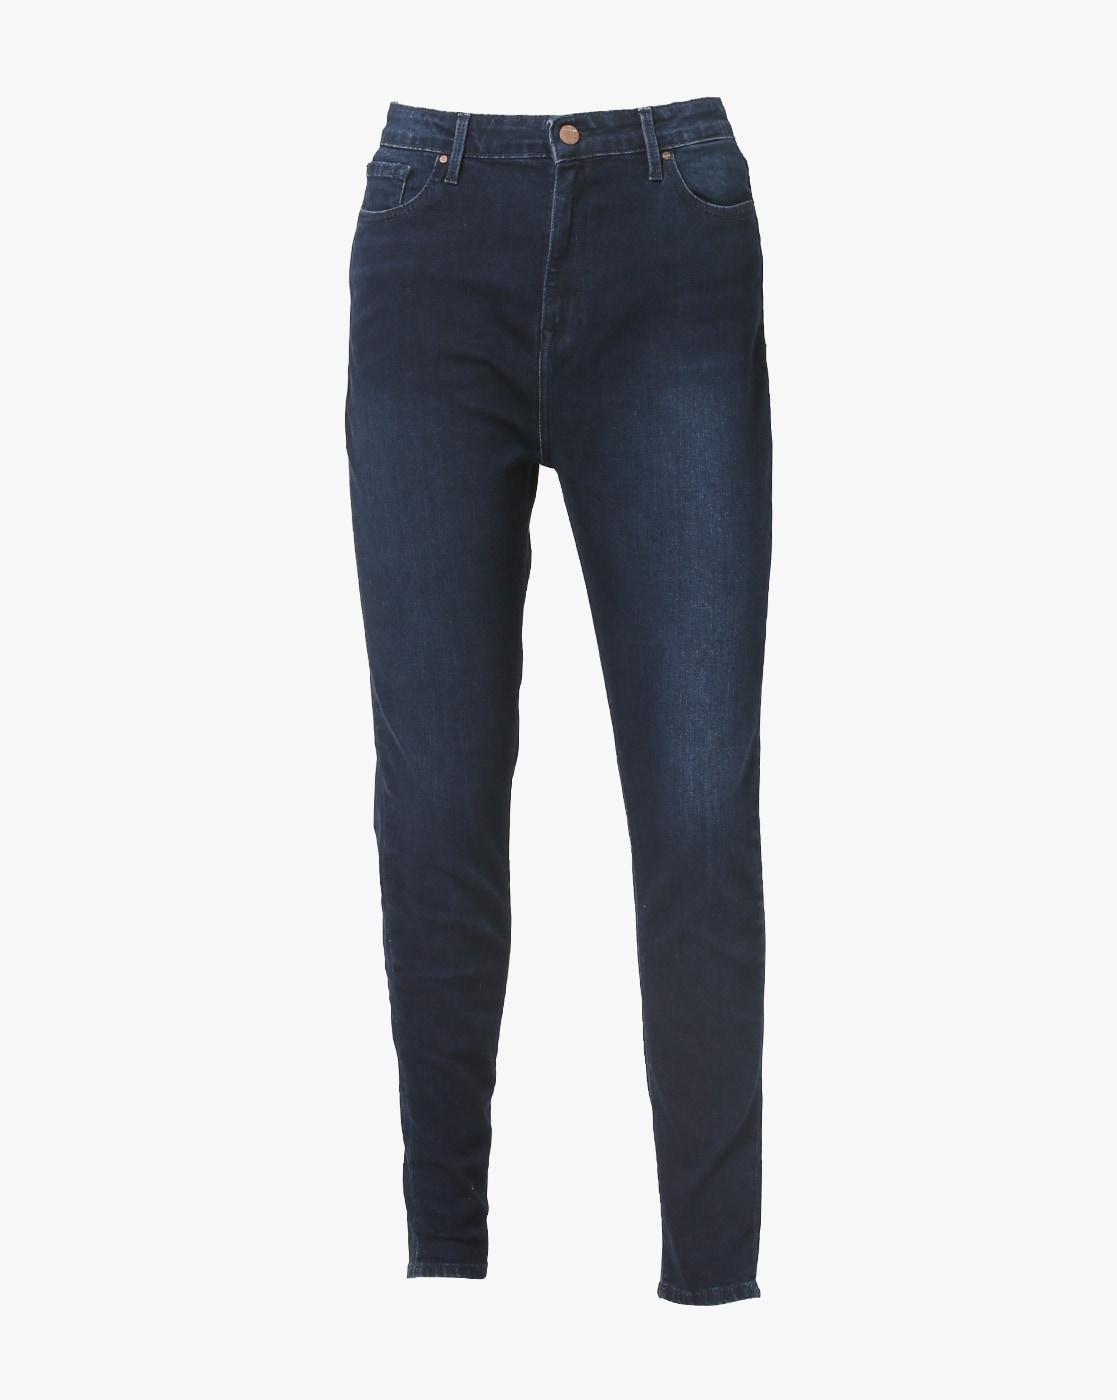 Buy Blue Jeans for Men by Celio Online | Ajio.com